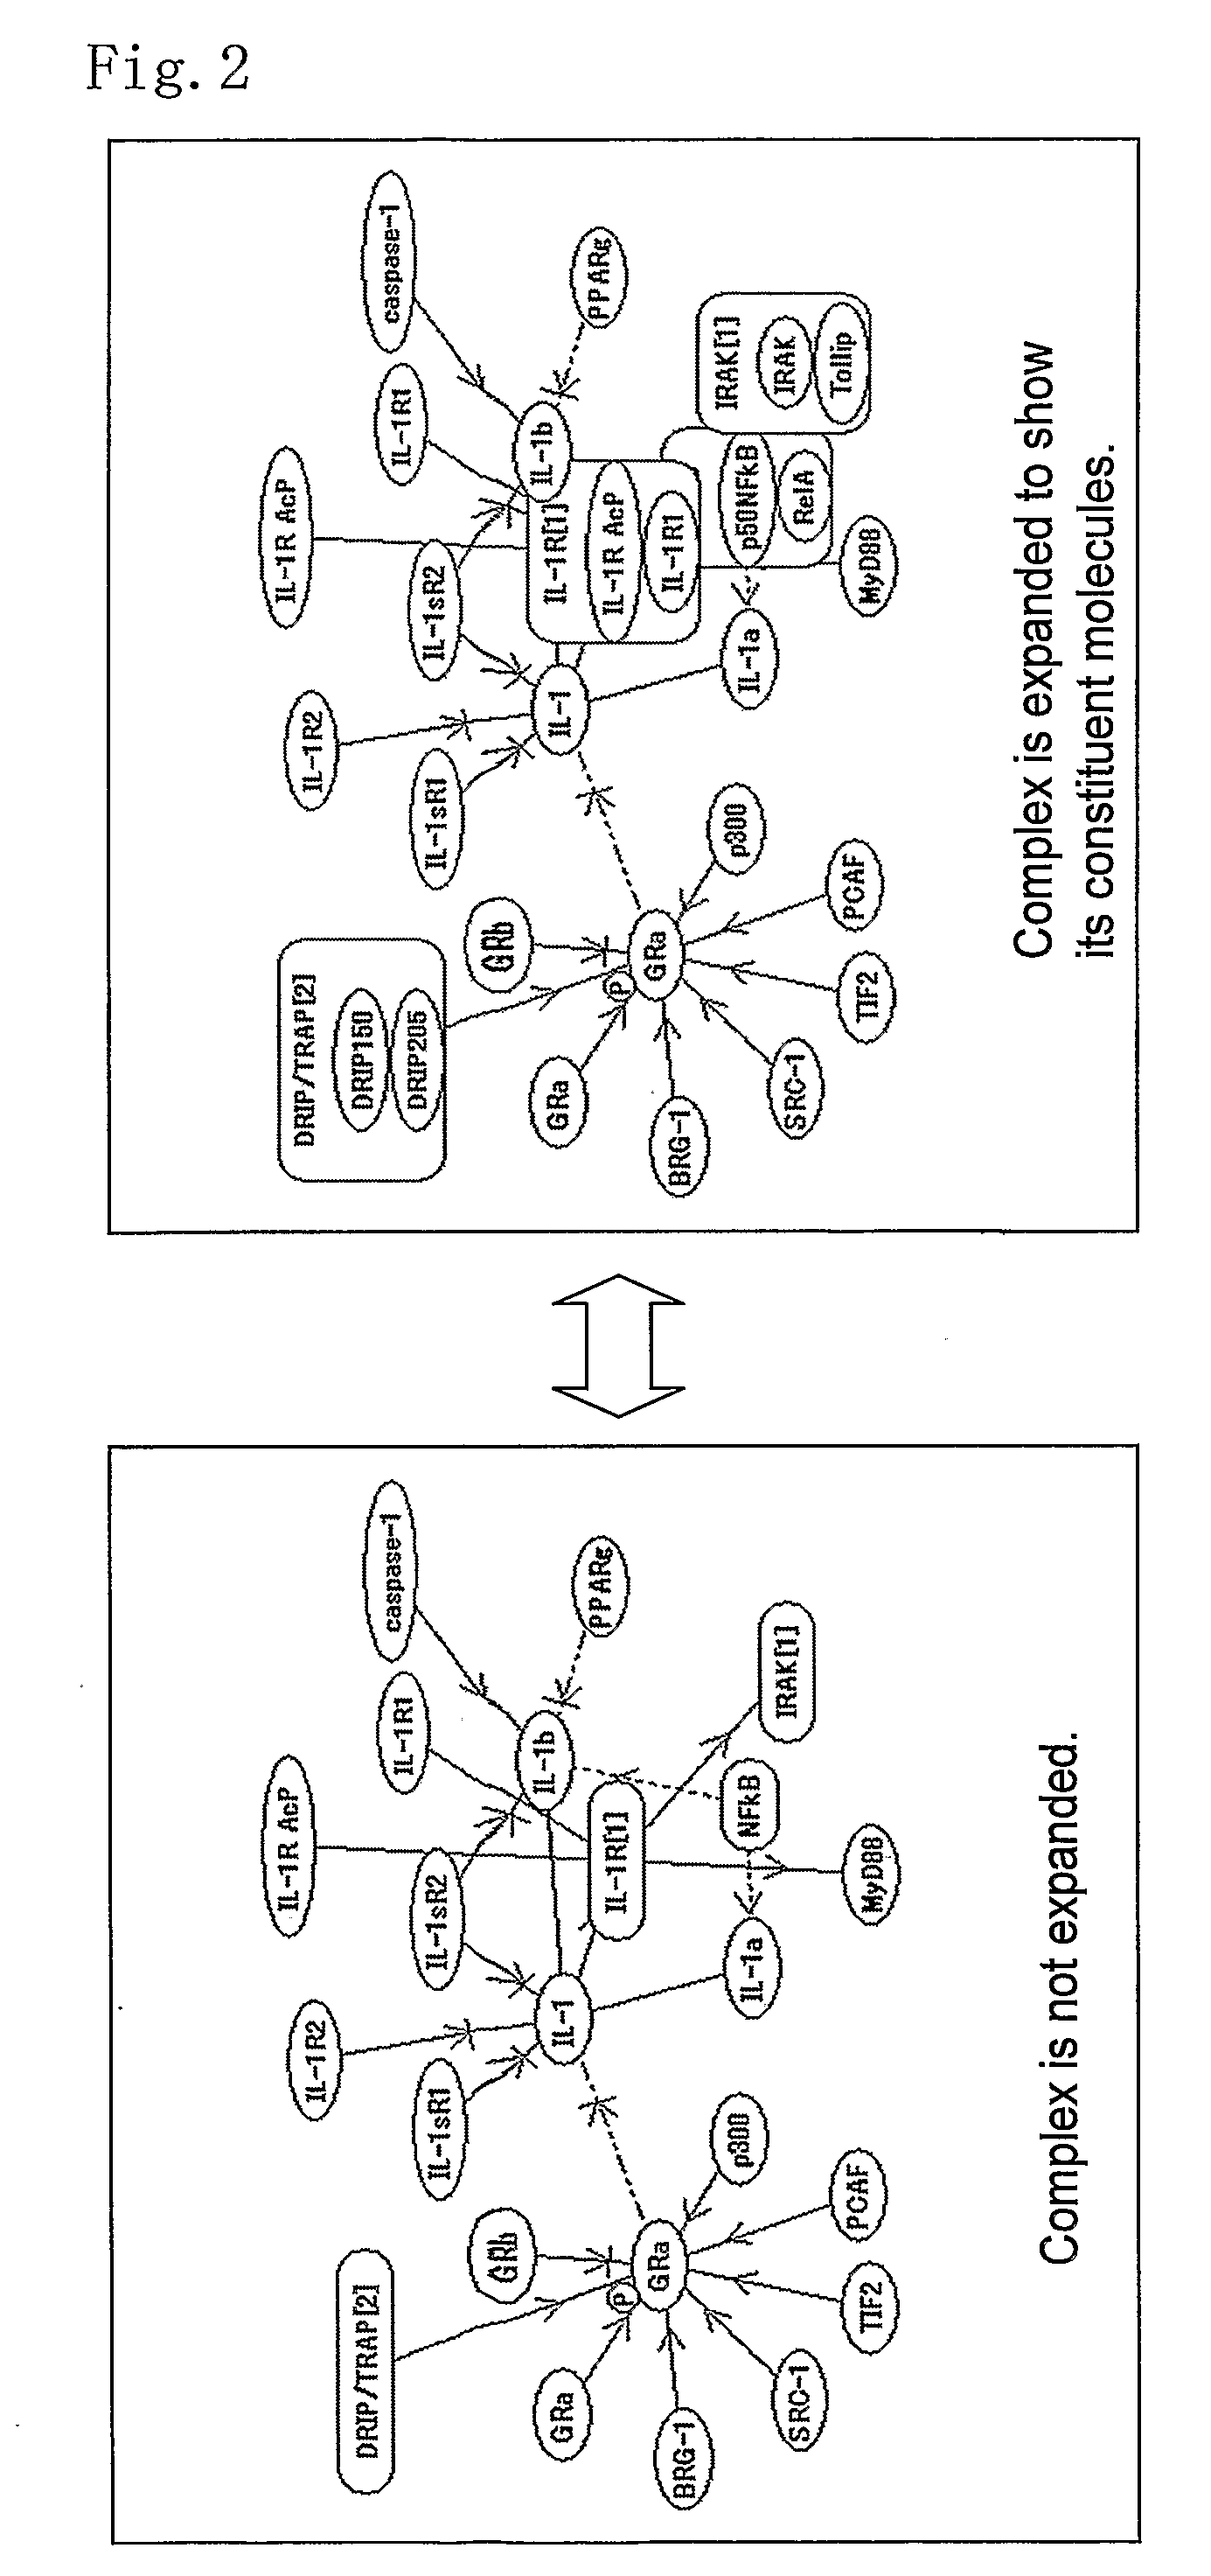 Method of Displaying Molecule Function Network